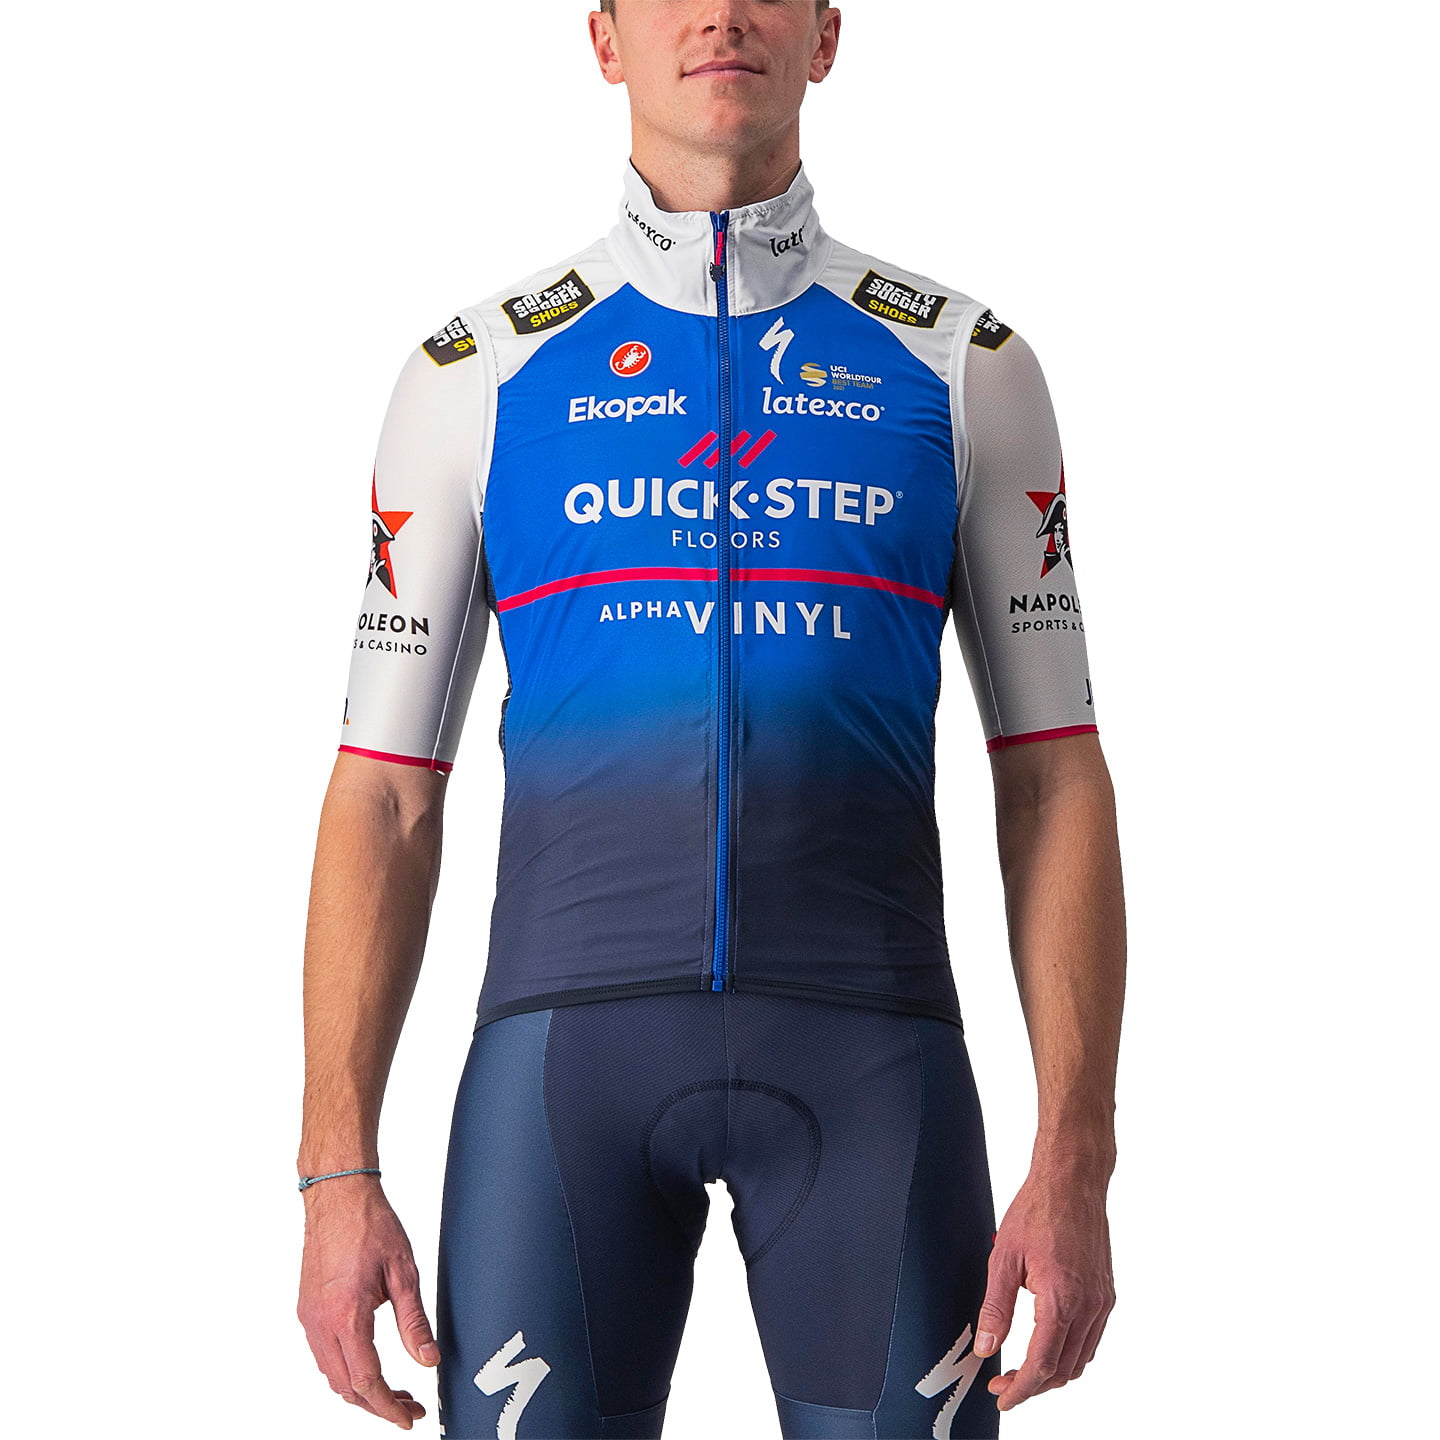 QUICK-STEP ALPHA VINYL 2022 Wind Vest, for men, size L, Cycling vest, Cycle gear